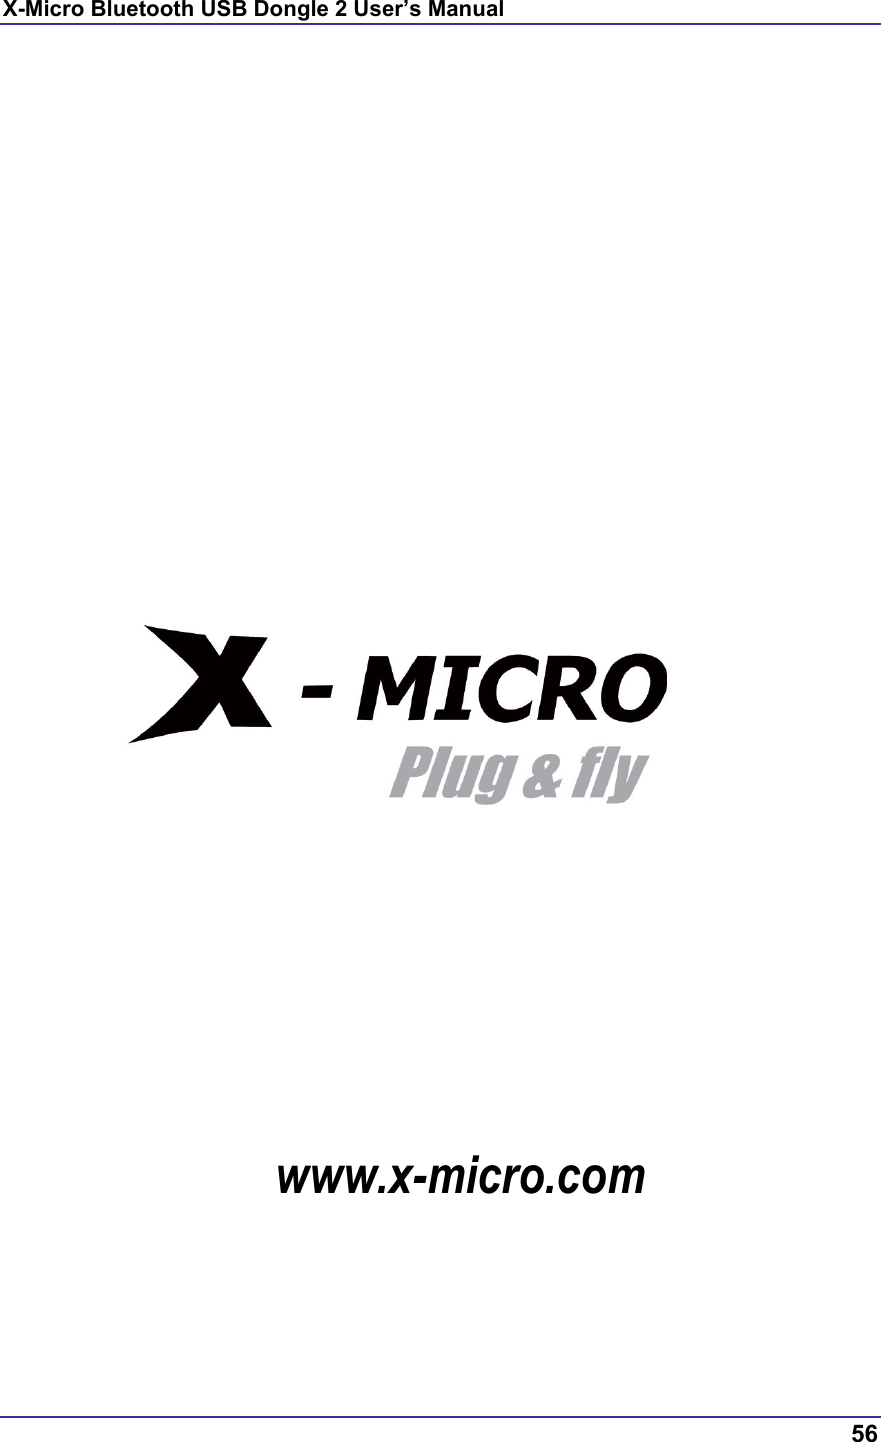 X-Micro Bluetooth USB Dongle 2 User’s Manual  56   www.x-micro.com  